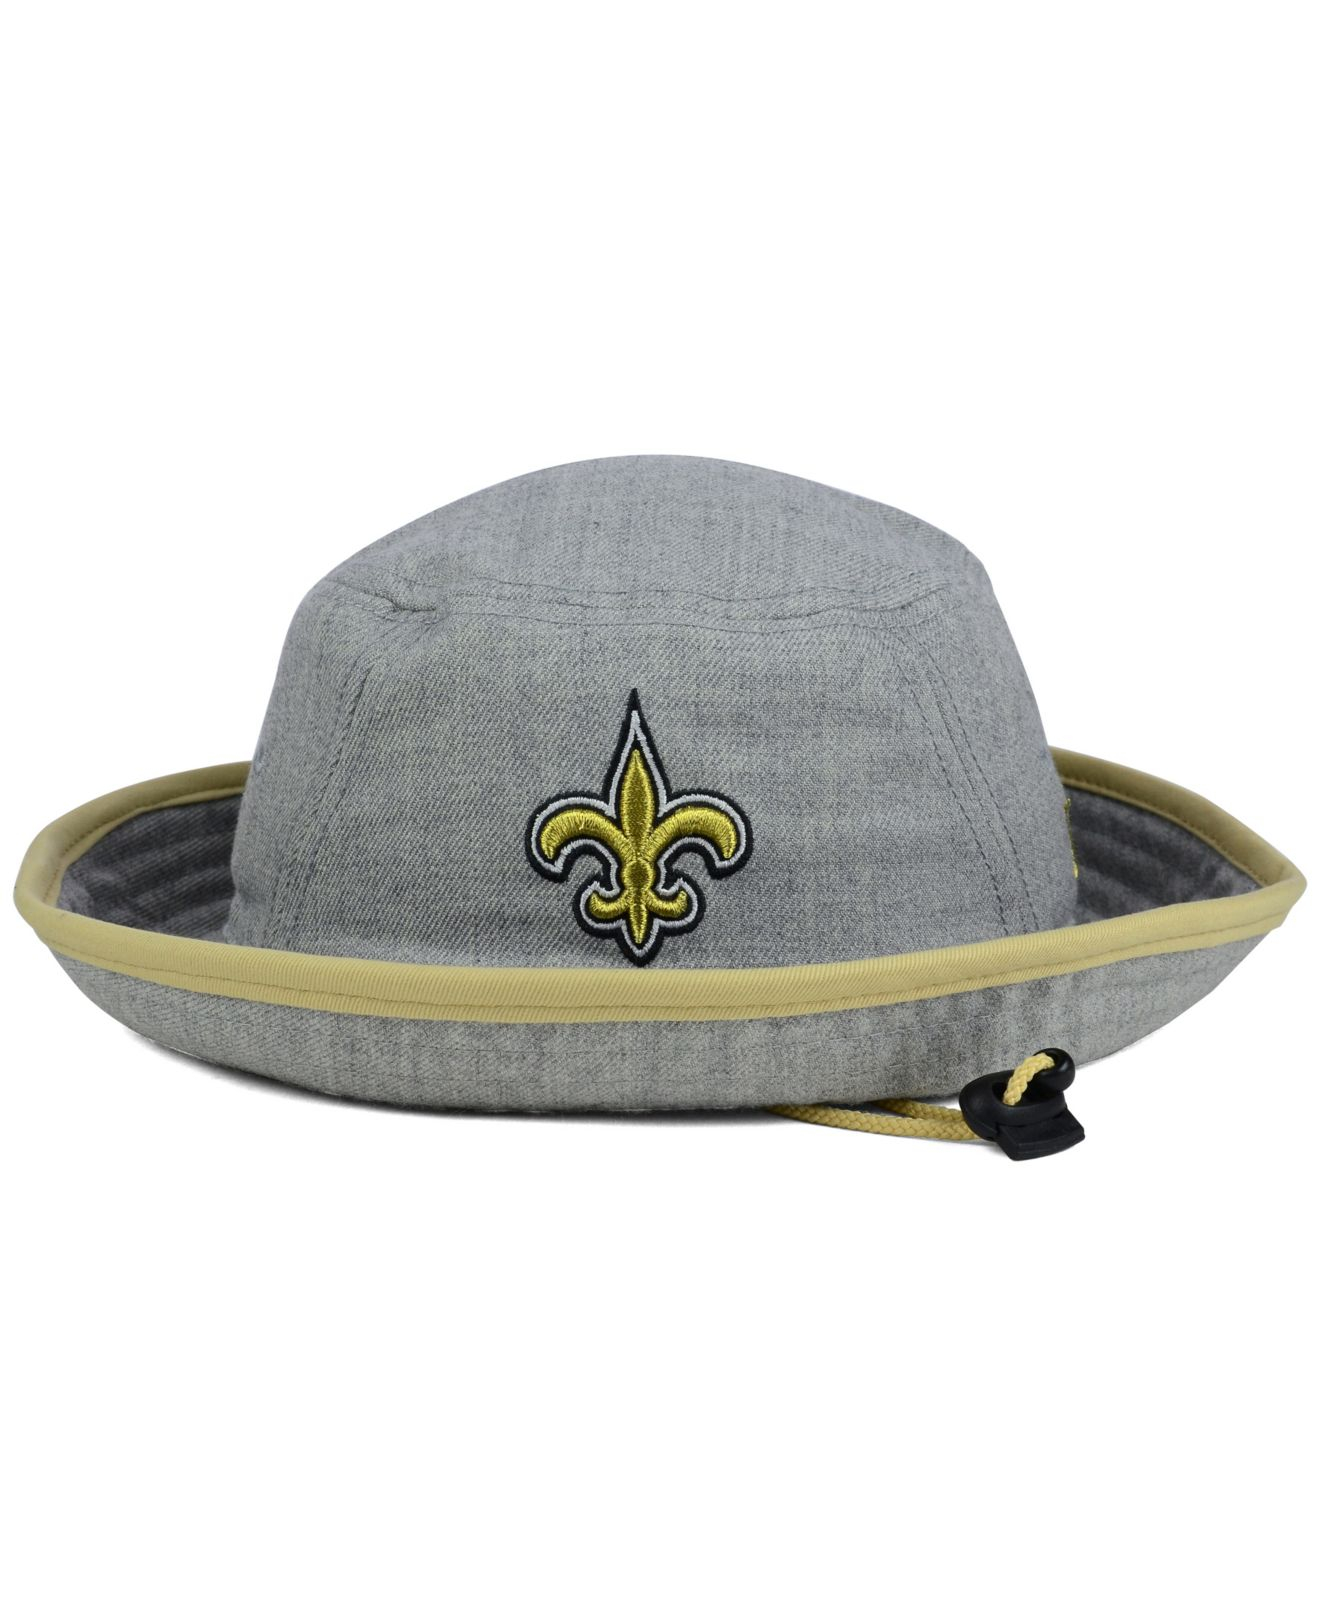 New Era New Orleans Saints Nfl Heather Gray Bucket Hat in Gray (Heather ...